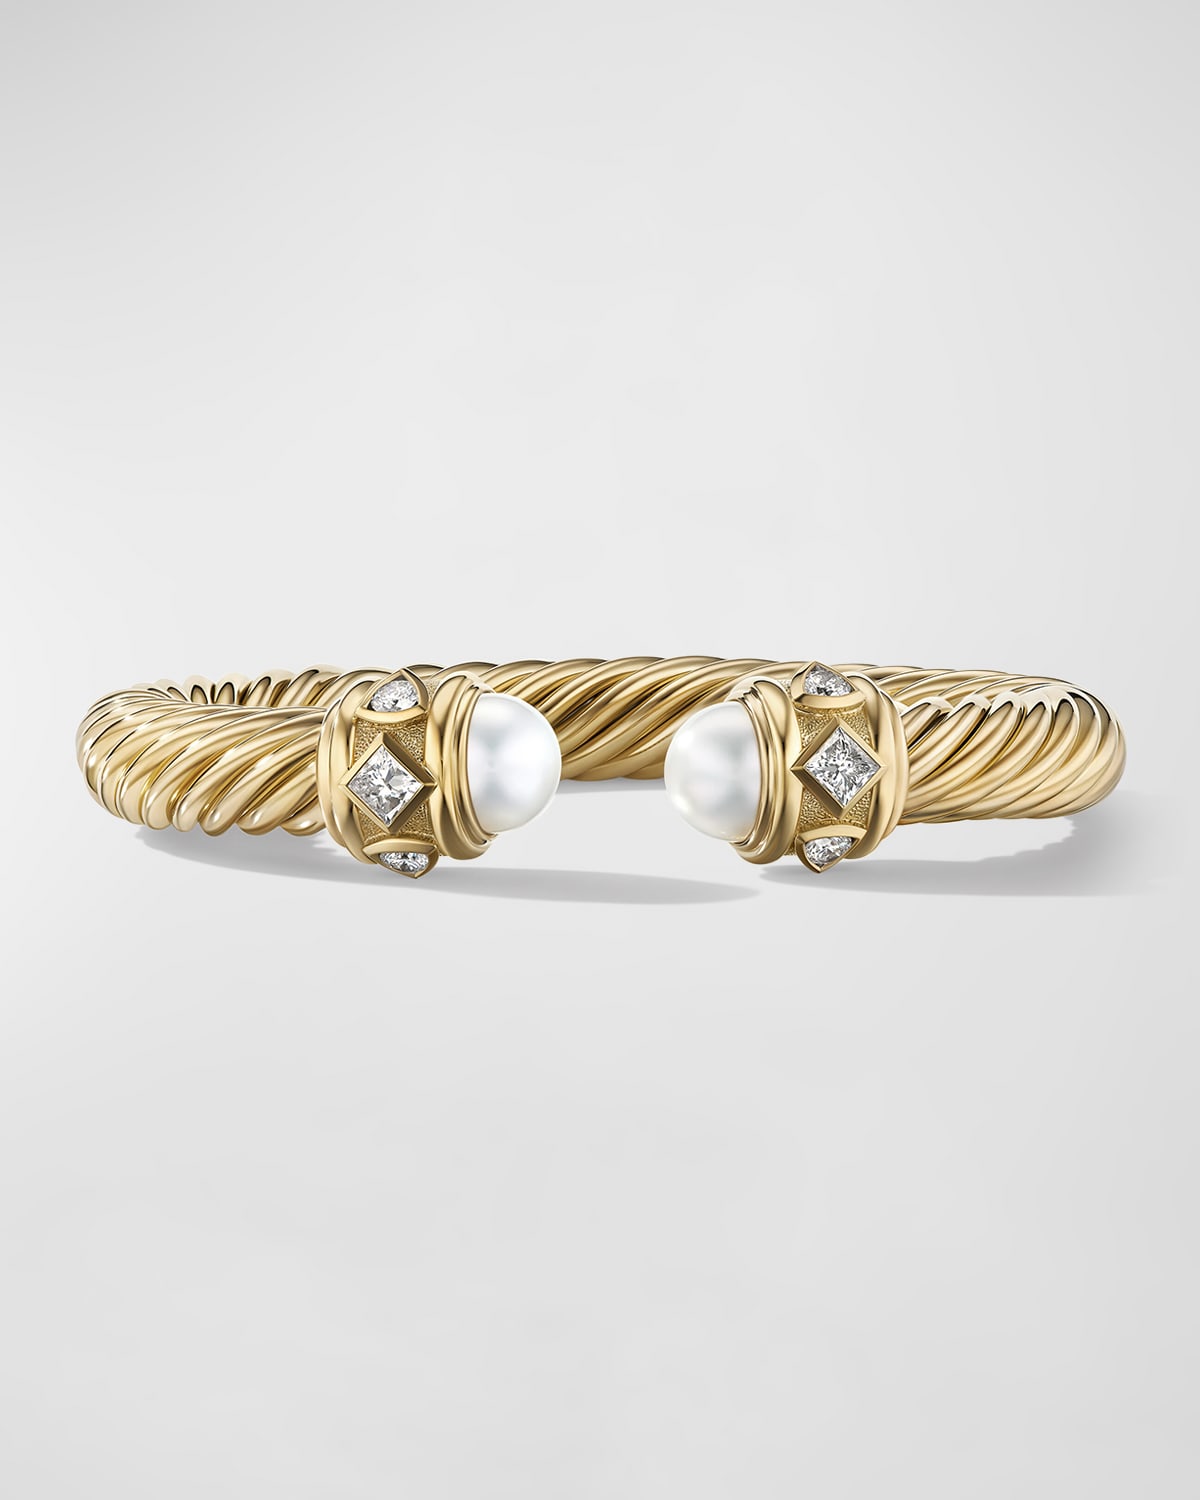 David Yurman Renaissance Bracelet With Pearls And Diamonds In 18k Gold, 11mm In Diamond/pearl